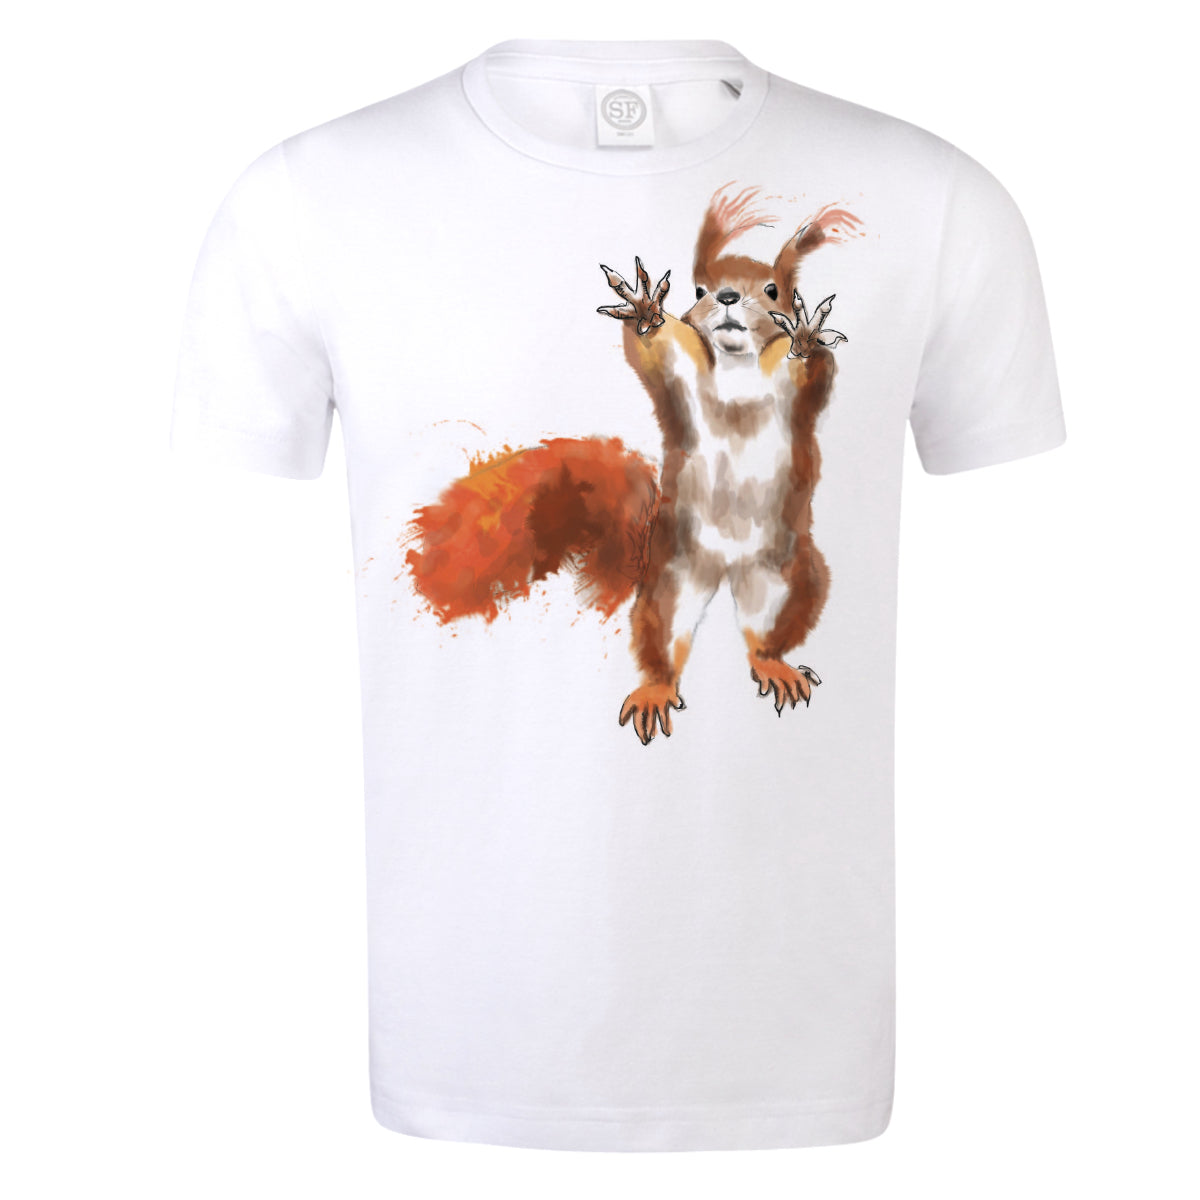 Red squirrel kids t-shirt